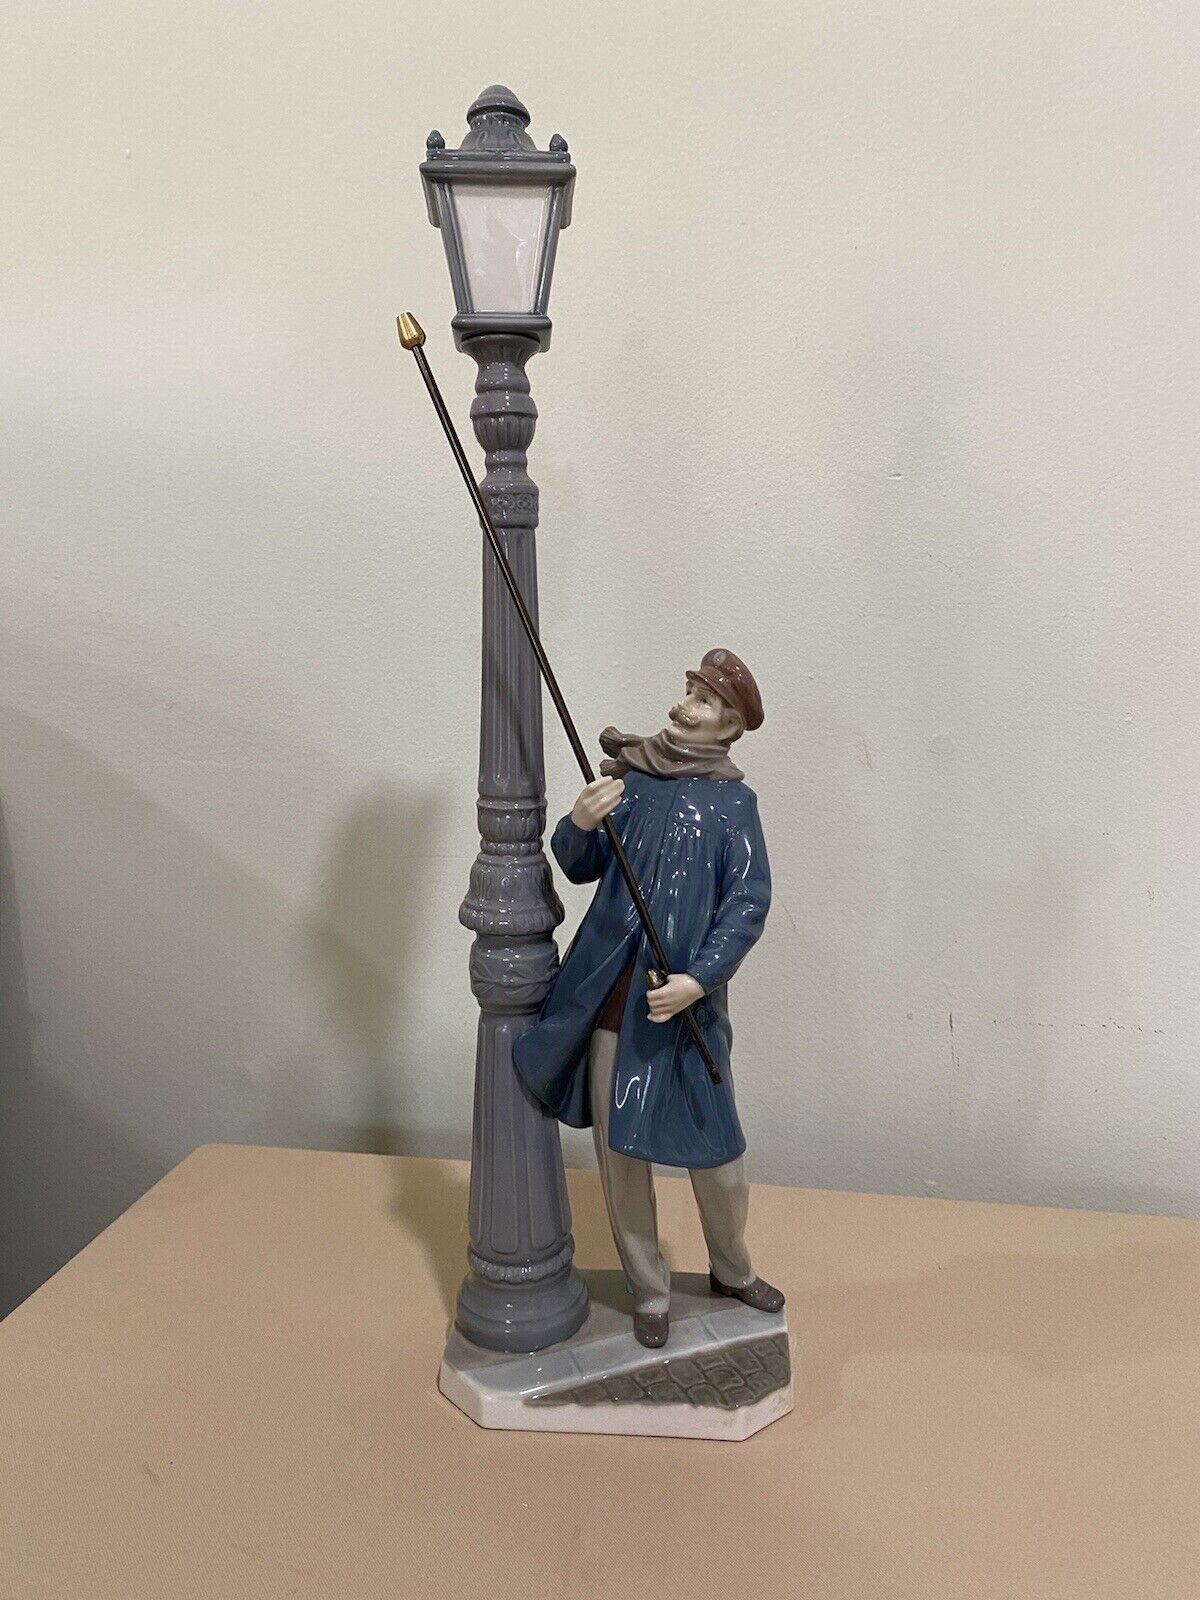 Lladro Lamplighter Figurine 5205